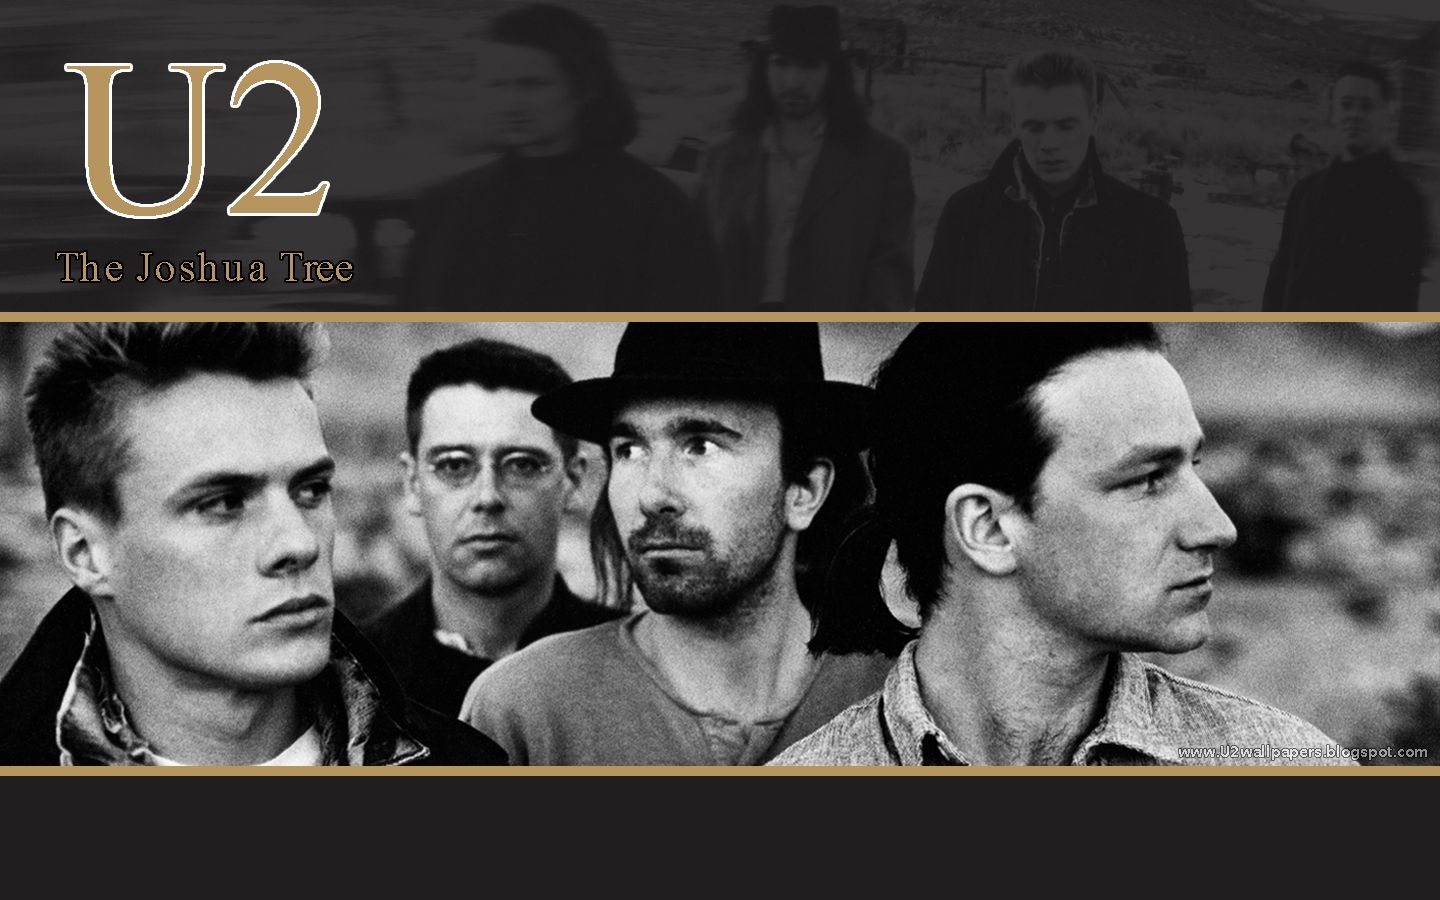 U2. U2 Wallpaper 2013 07 Monday Monday. Joshua Tree Wallpaper, Joshua Tree, Best Rock Bands